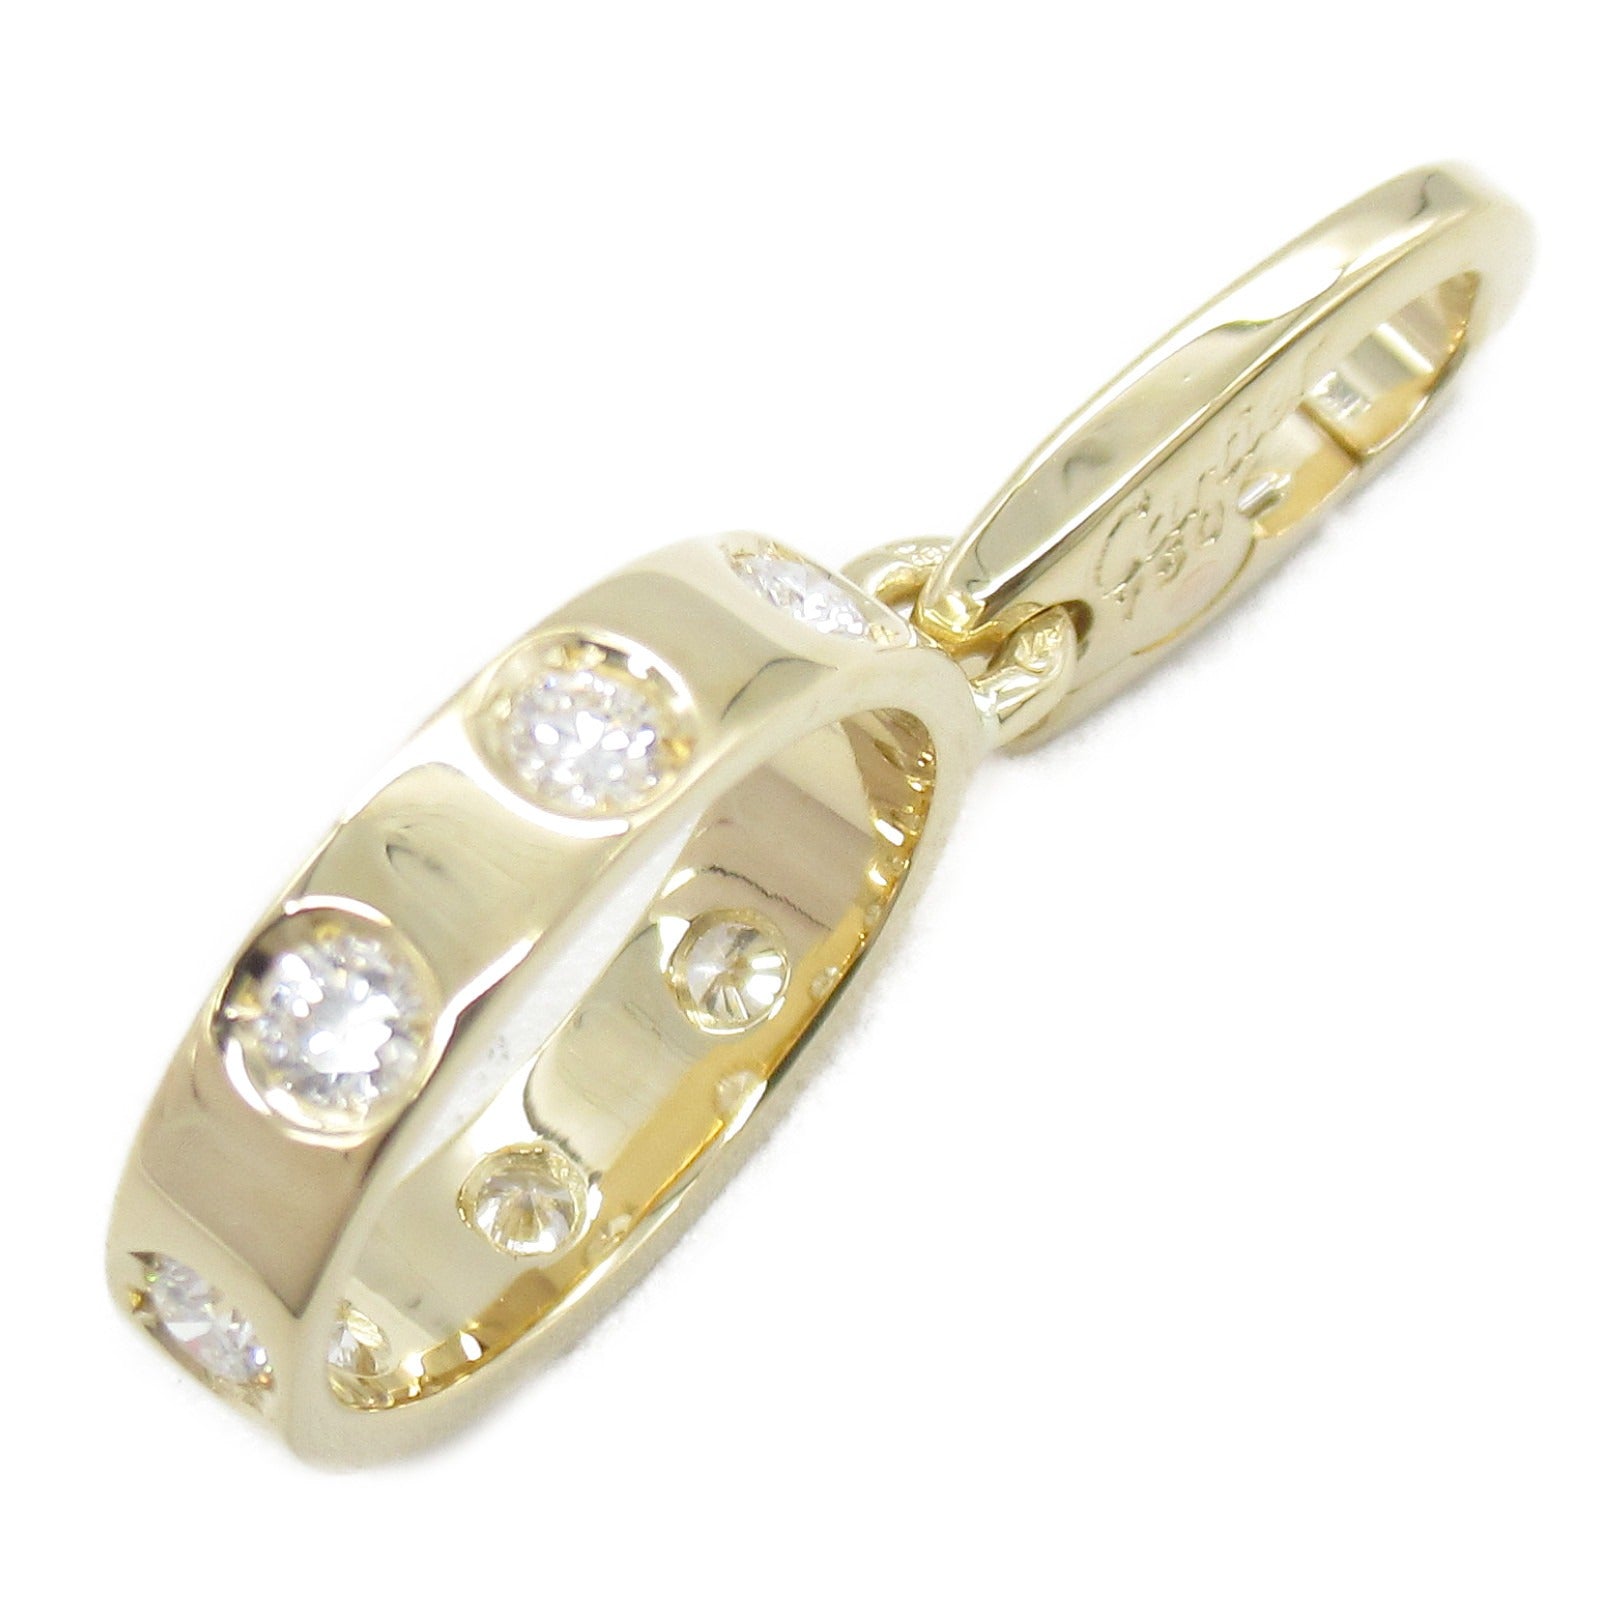 Cartier Cartier  Diamond Charm Pendant Top Jewelry K18 (yellow g) Diamond   Clearance